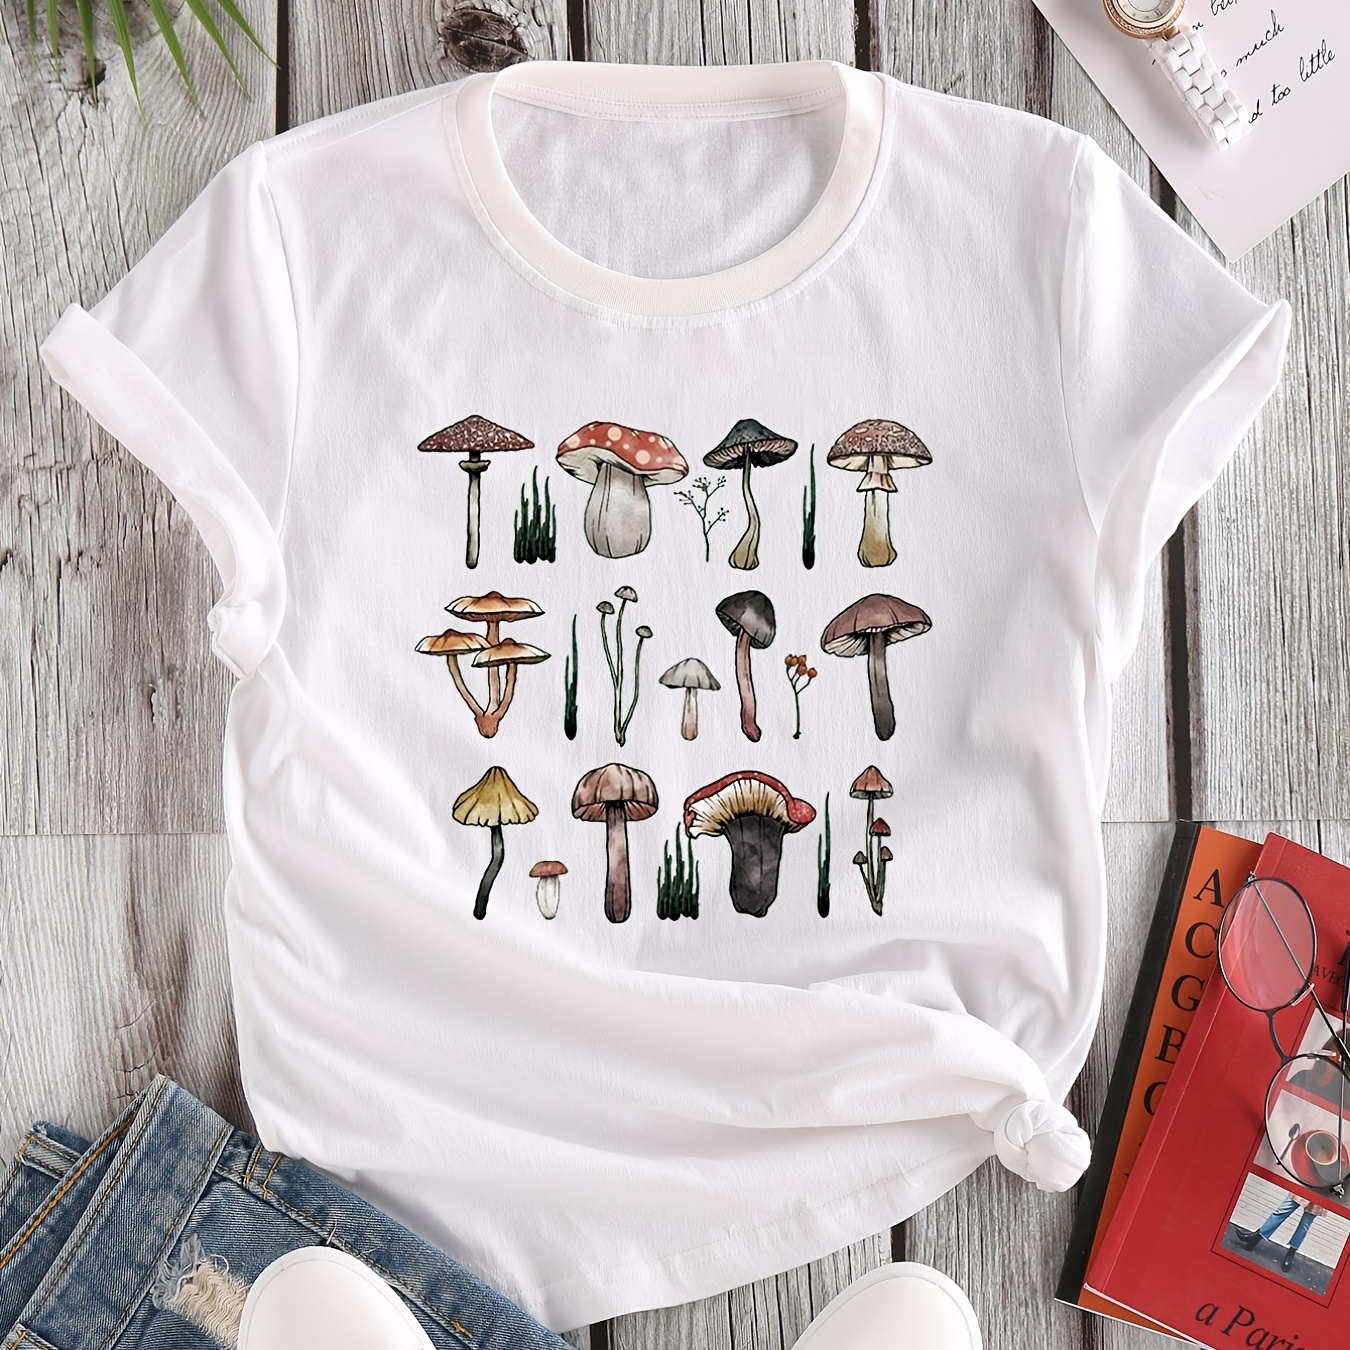 

Mushroom Print T-shirt, Crew Neck Short Sleeve T-shirt, Casual Every Day Tops, Women's Clothing